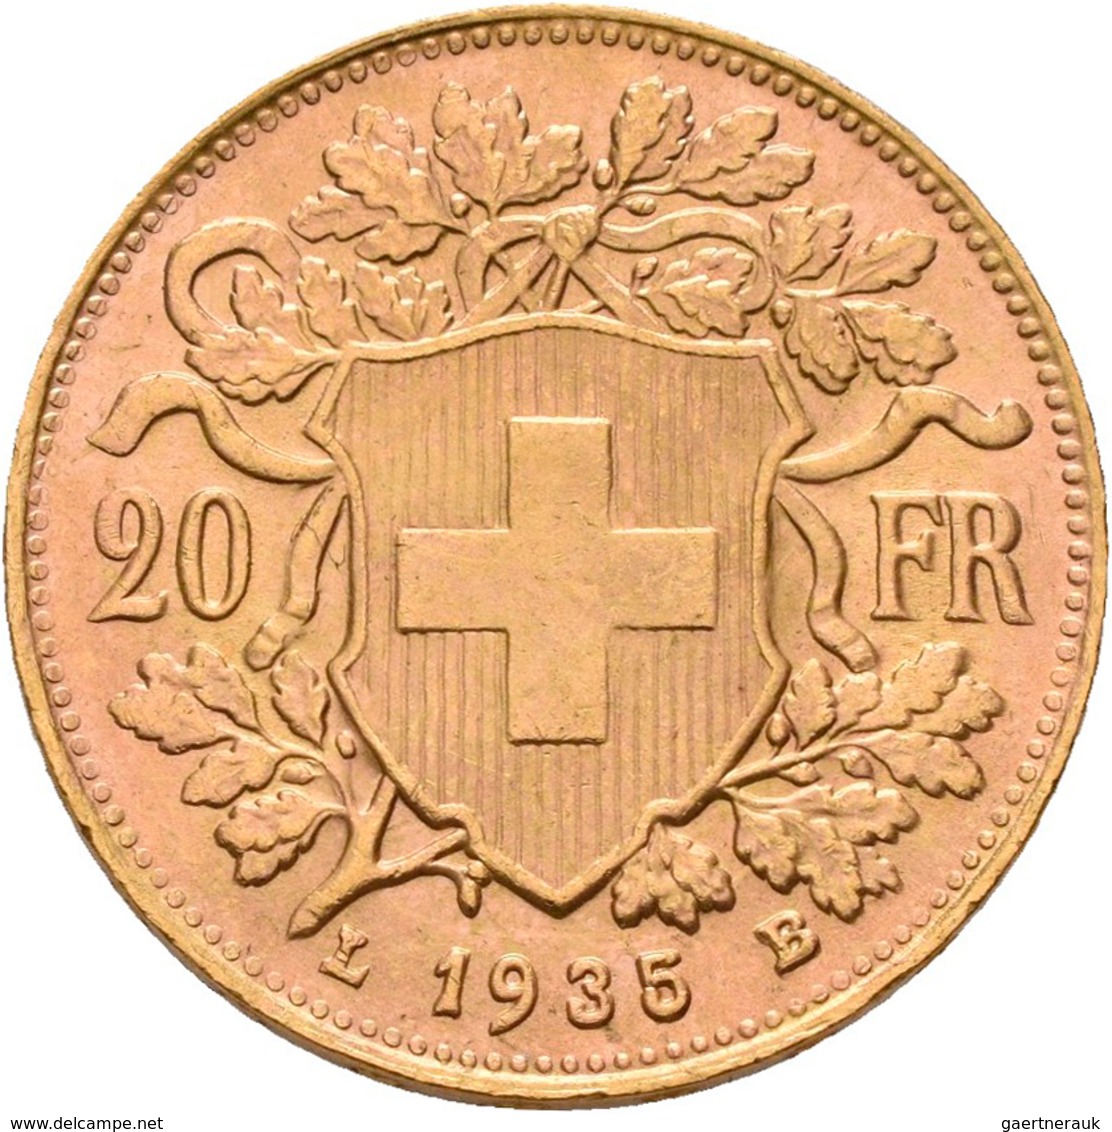 Schweiz - Anlagegold: Lot 4 Goldmünzen: 4 x 20 Franken 1935 LB (Vreneli). KM# 35.1, Friedberg 499. J